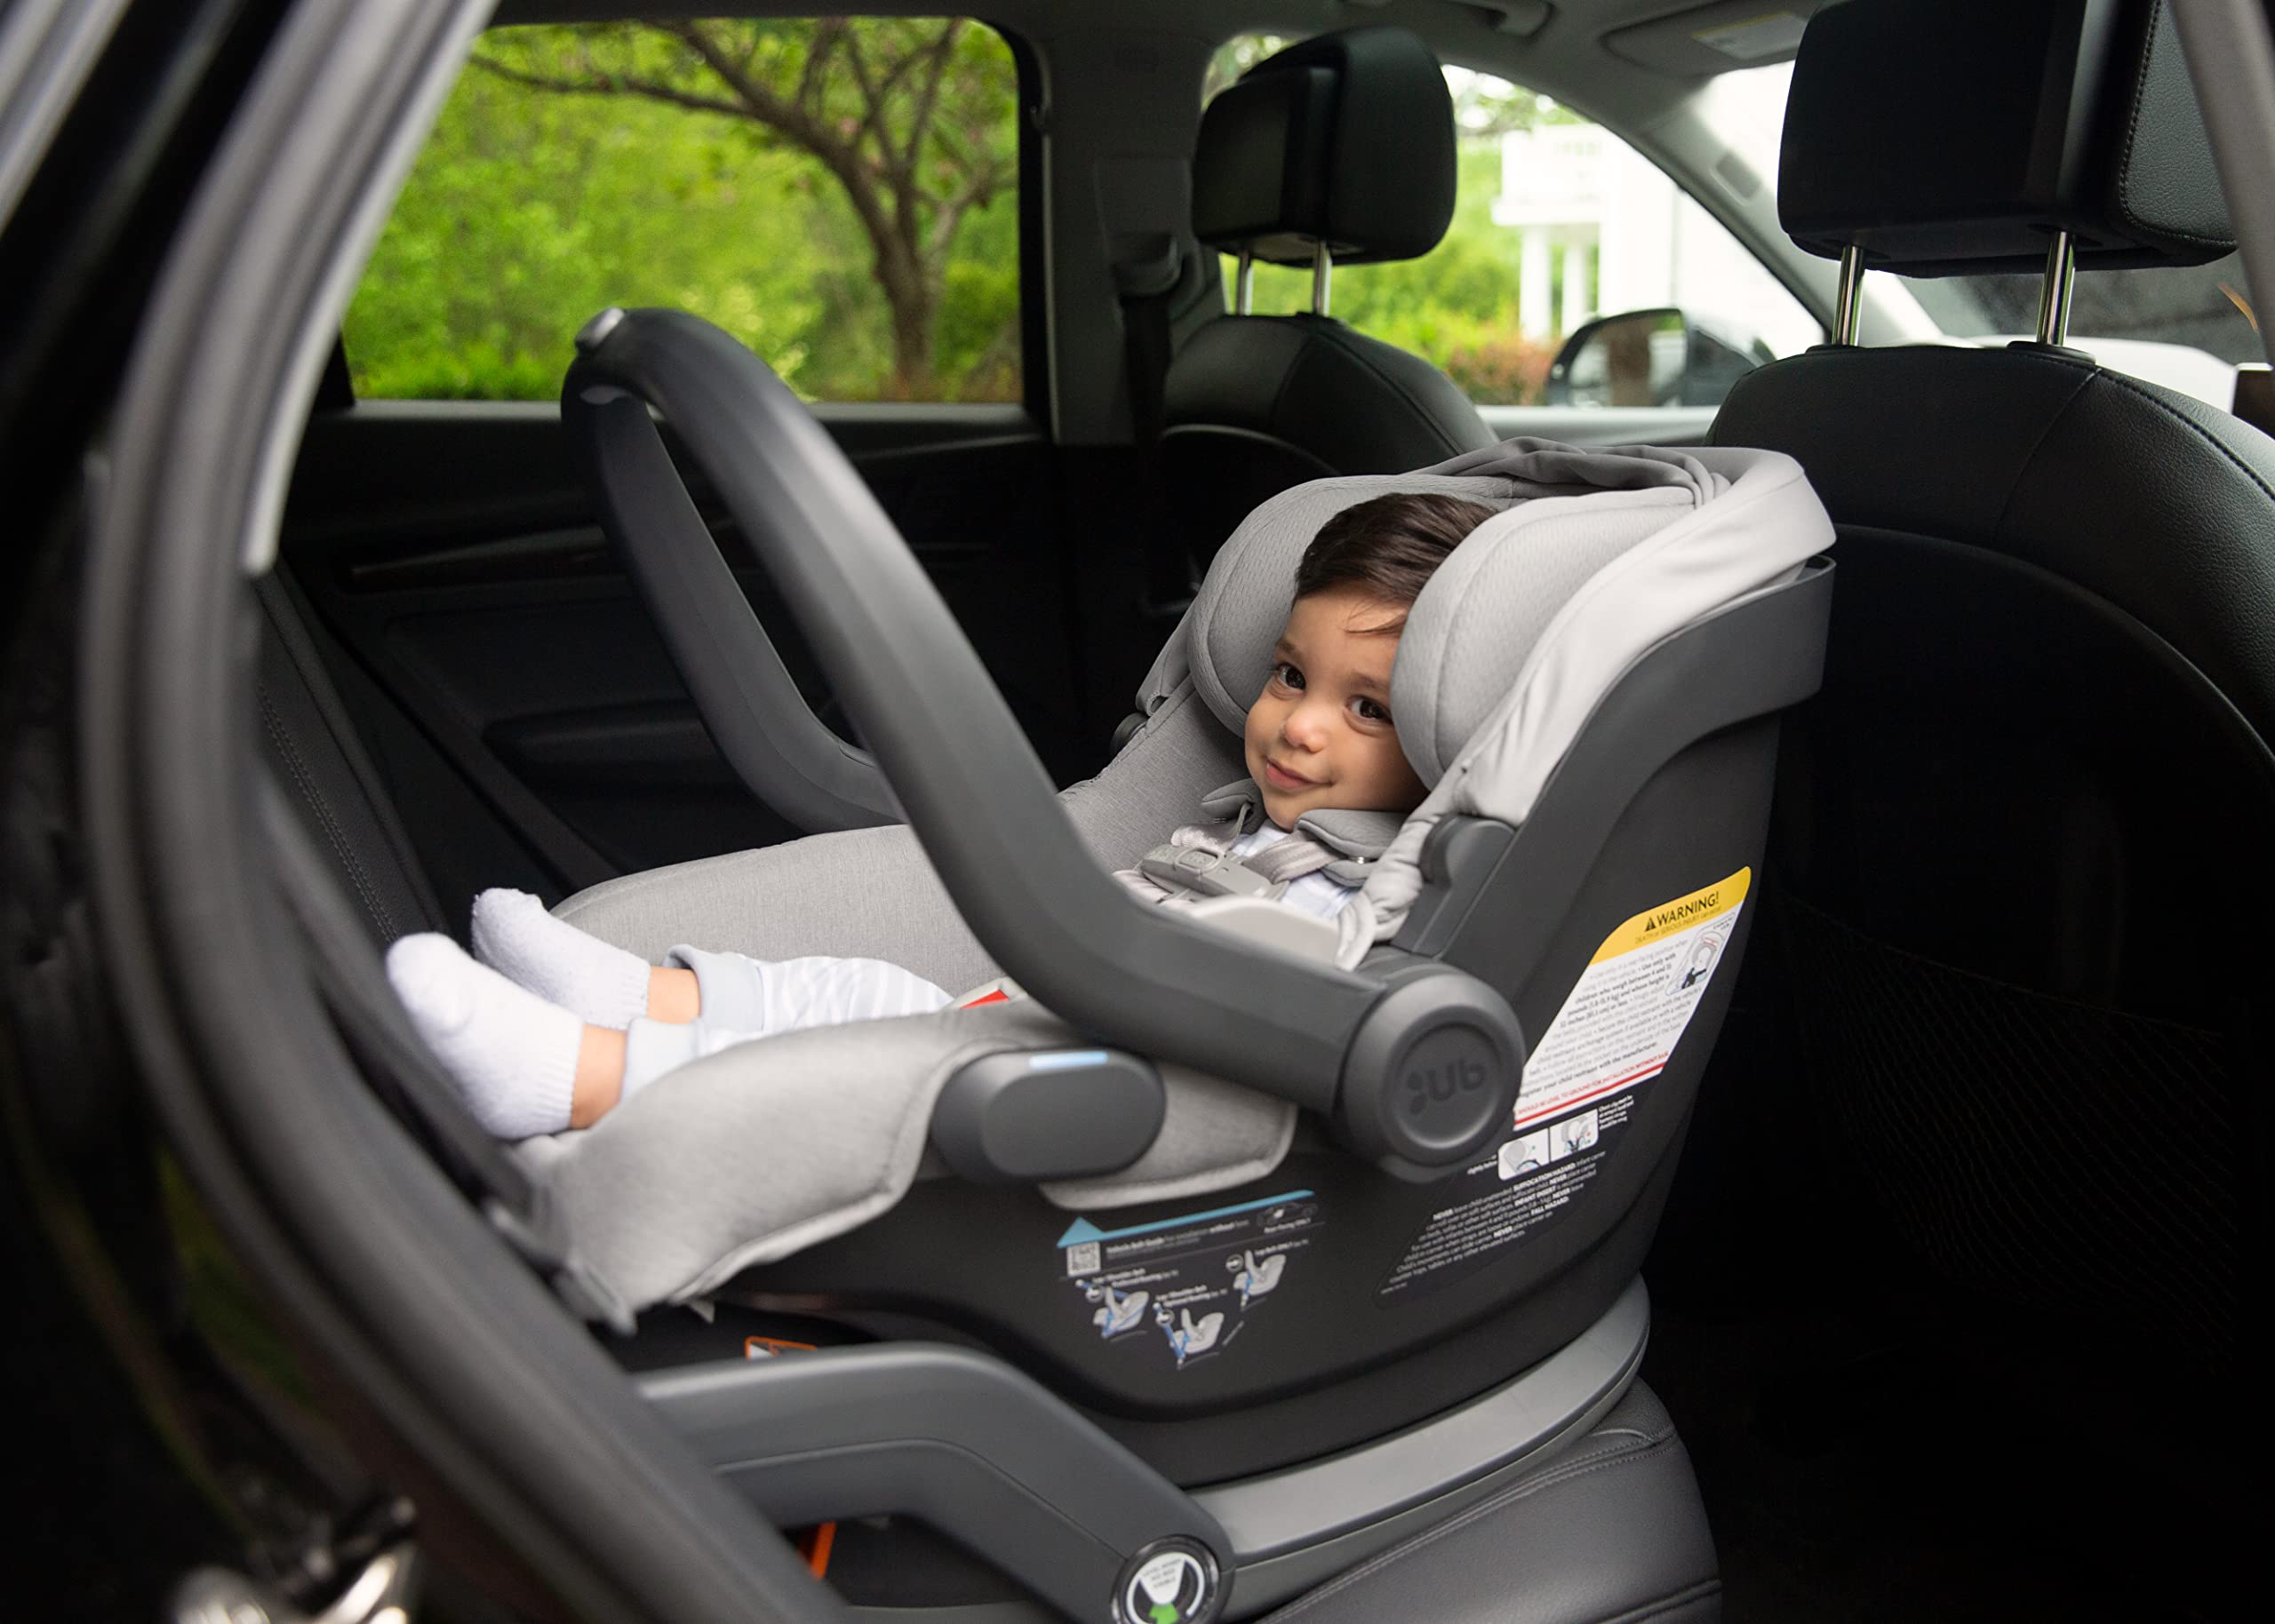 Mesa V2 Infant Car Seat - Greyson - Charcoal Melange | Merino Wool + Base for Mesa/Mesa V2